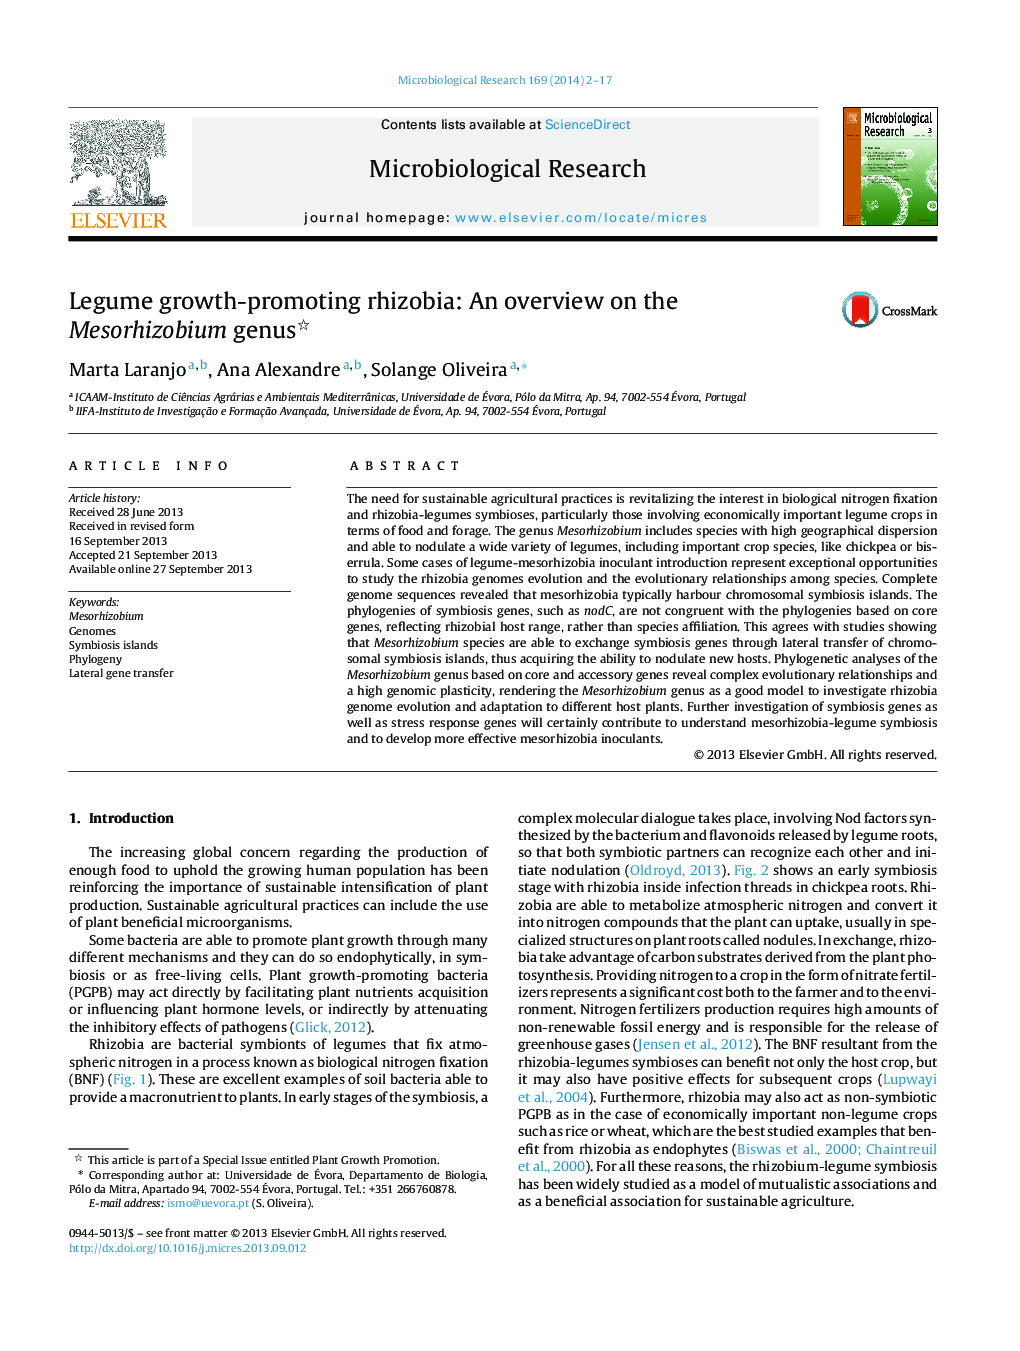 Legume growth-promoting rhizobia: An overview on the Mesorhizobium genus ?